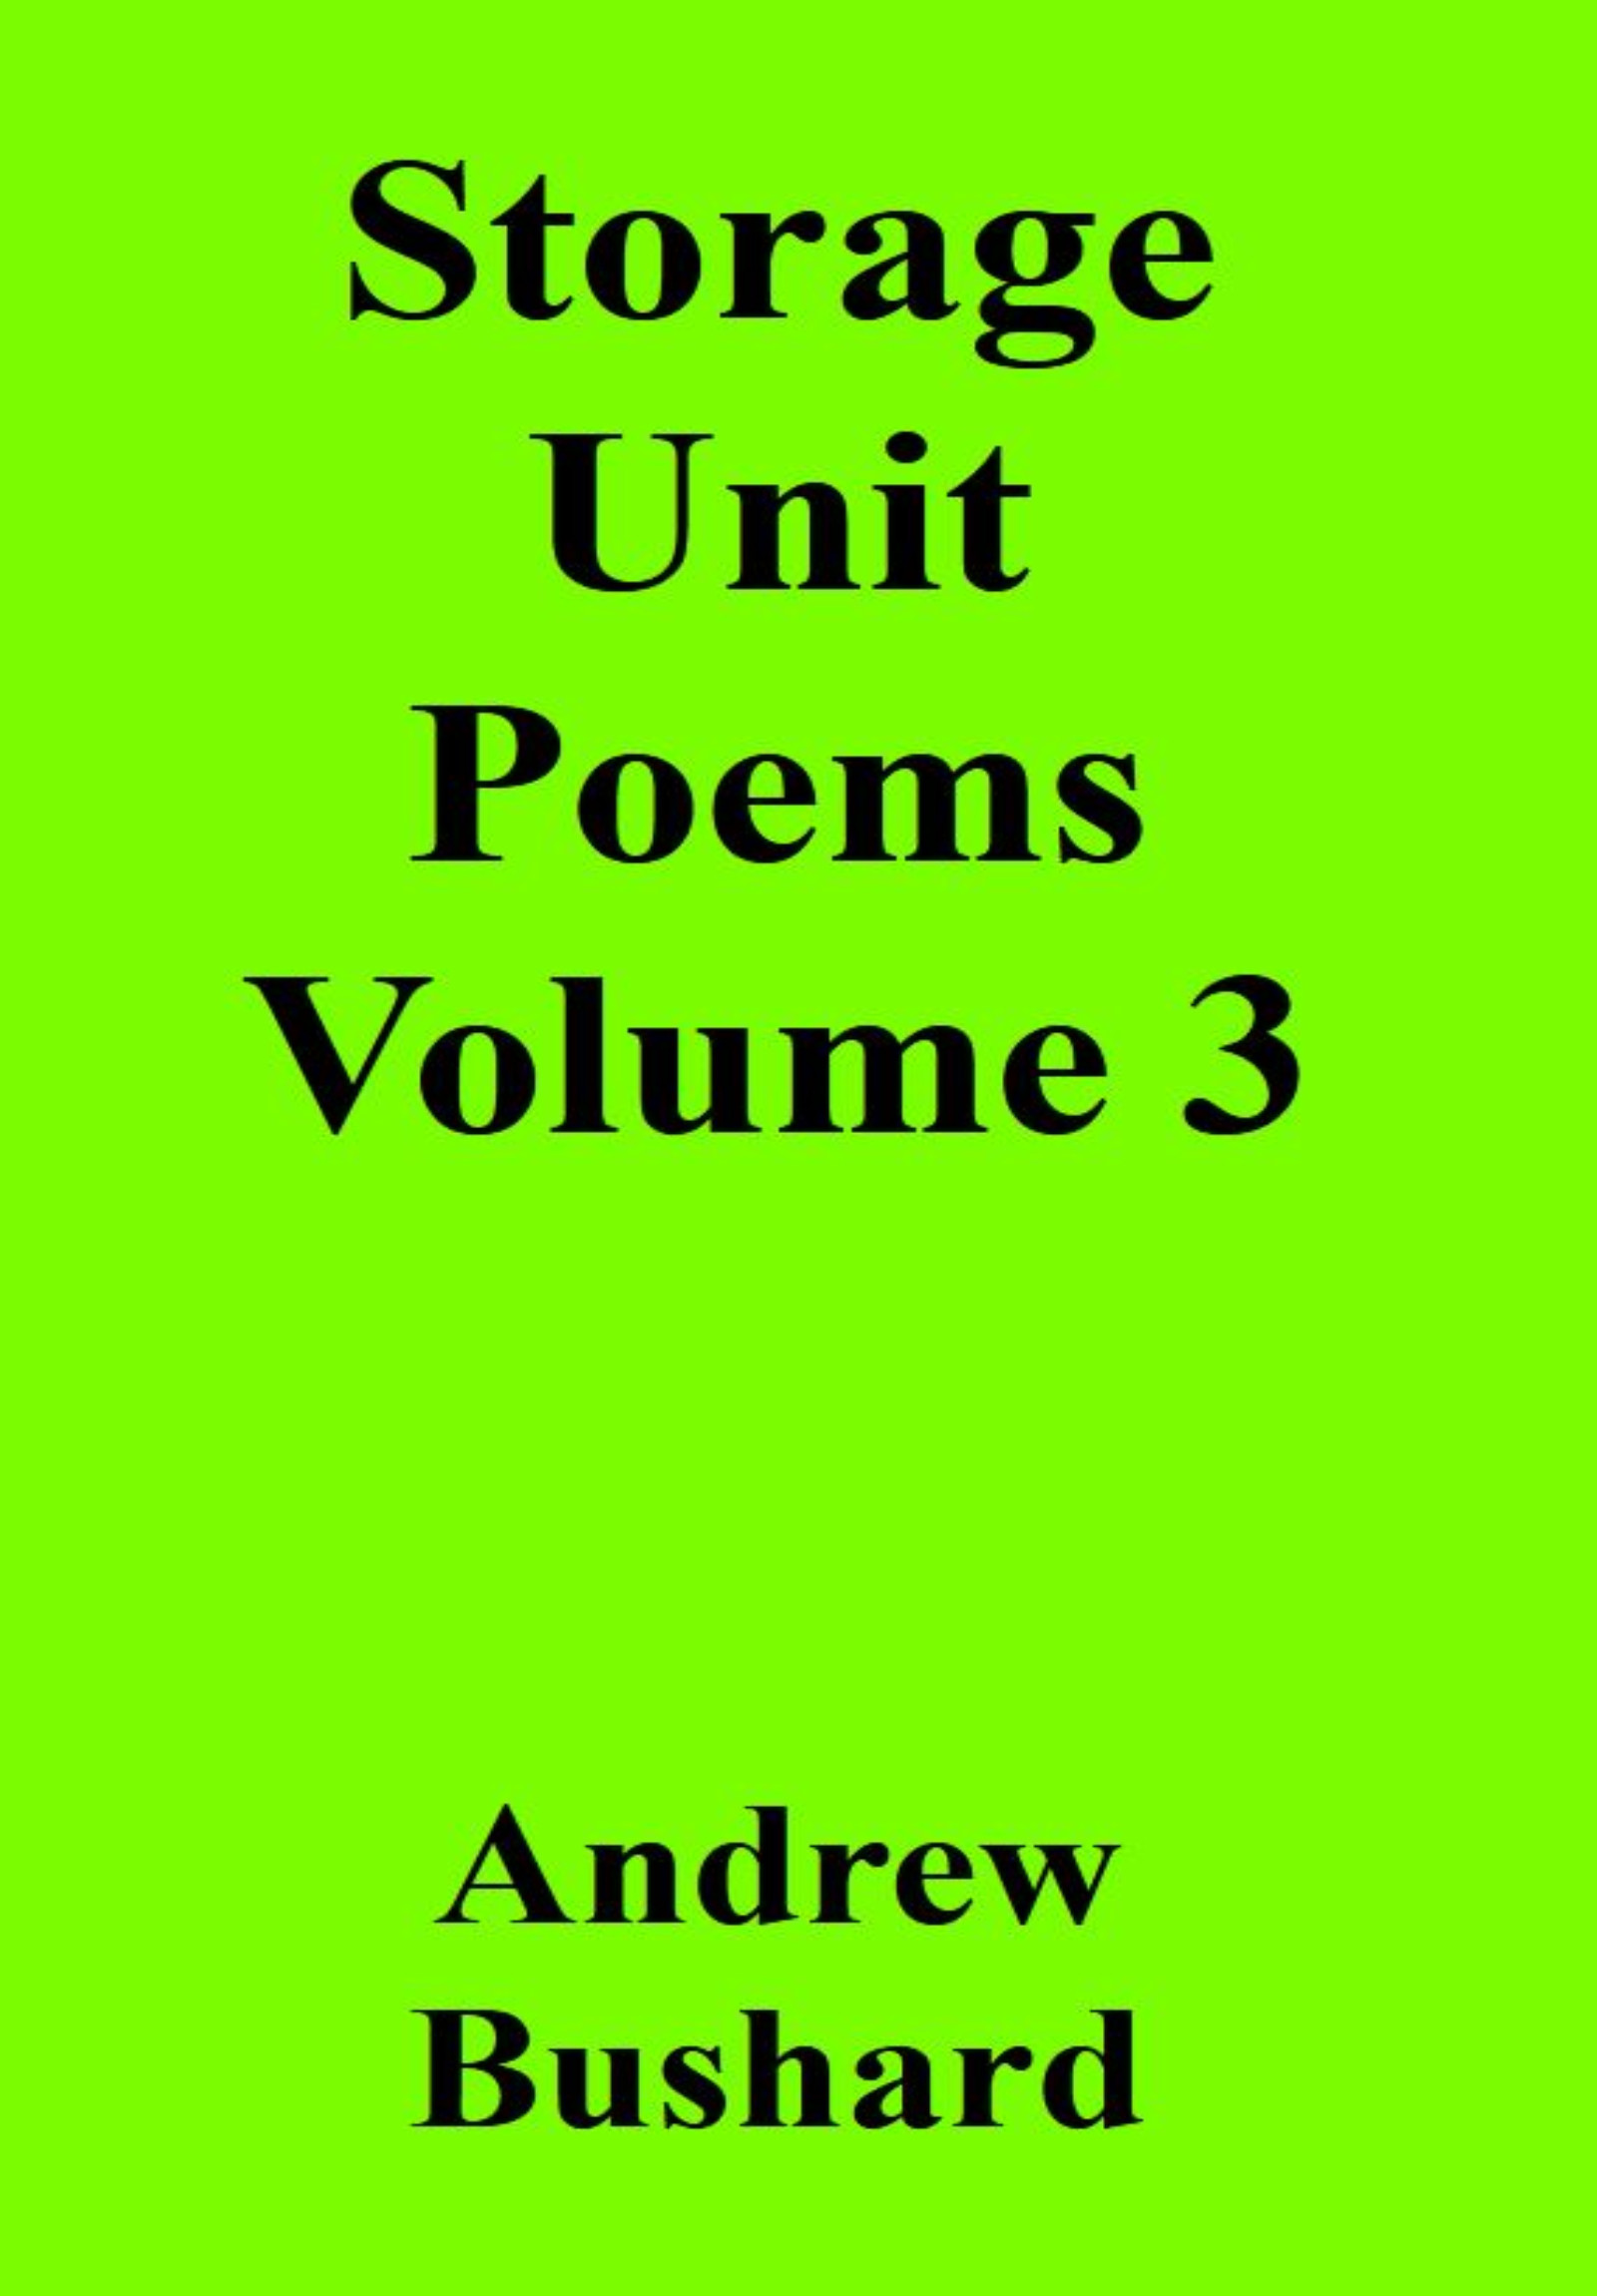 Storage Unit Poems Volume 3 Audiobook